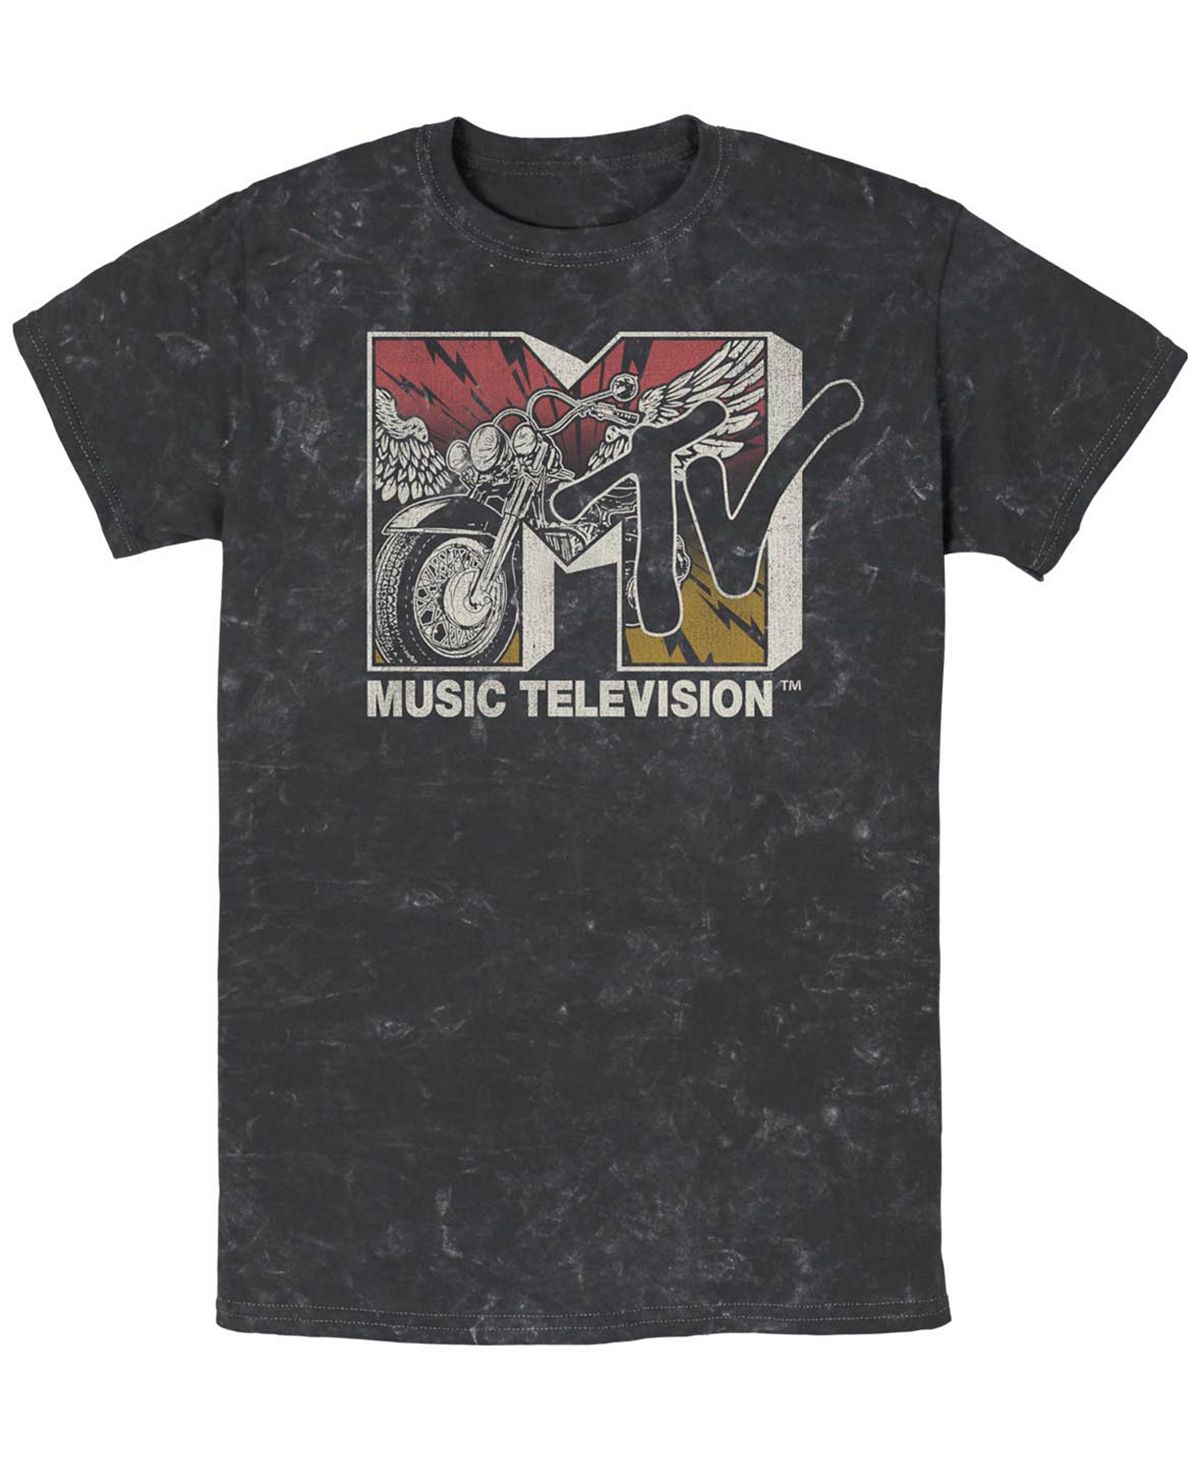 Мужская футболка mtv music ride mineral wash с коротким рукавом Fifth Sun, черный пульт для телевизора mystery mtv 4217lw